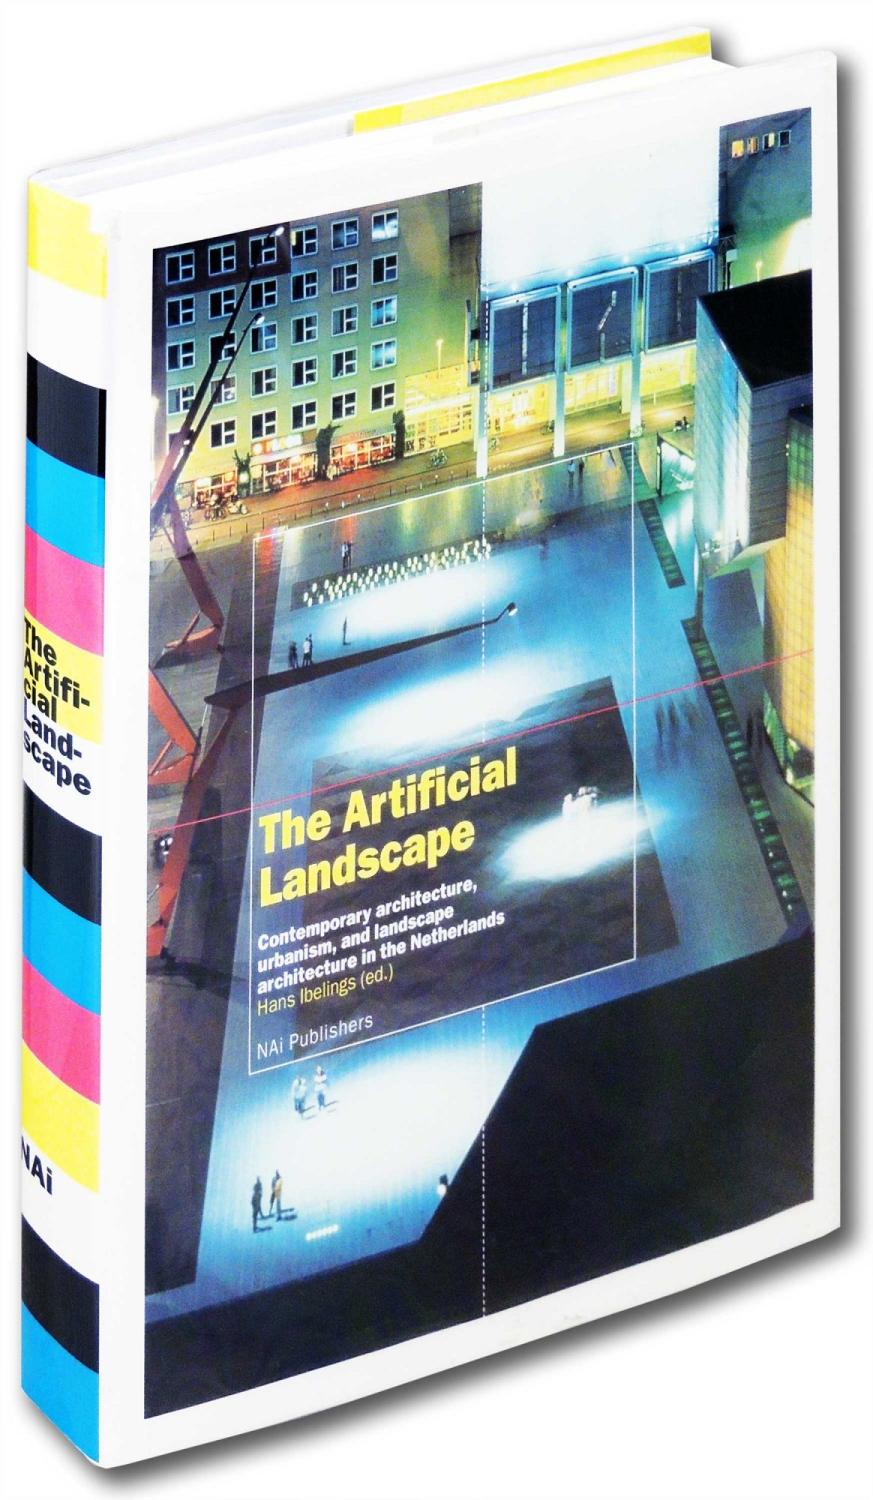 The Artificial Landscape. Contemporary architecture, urbanism, and landscape architecture in the Netherlands - Ibelings, Hans [editor]